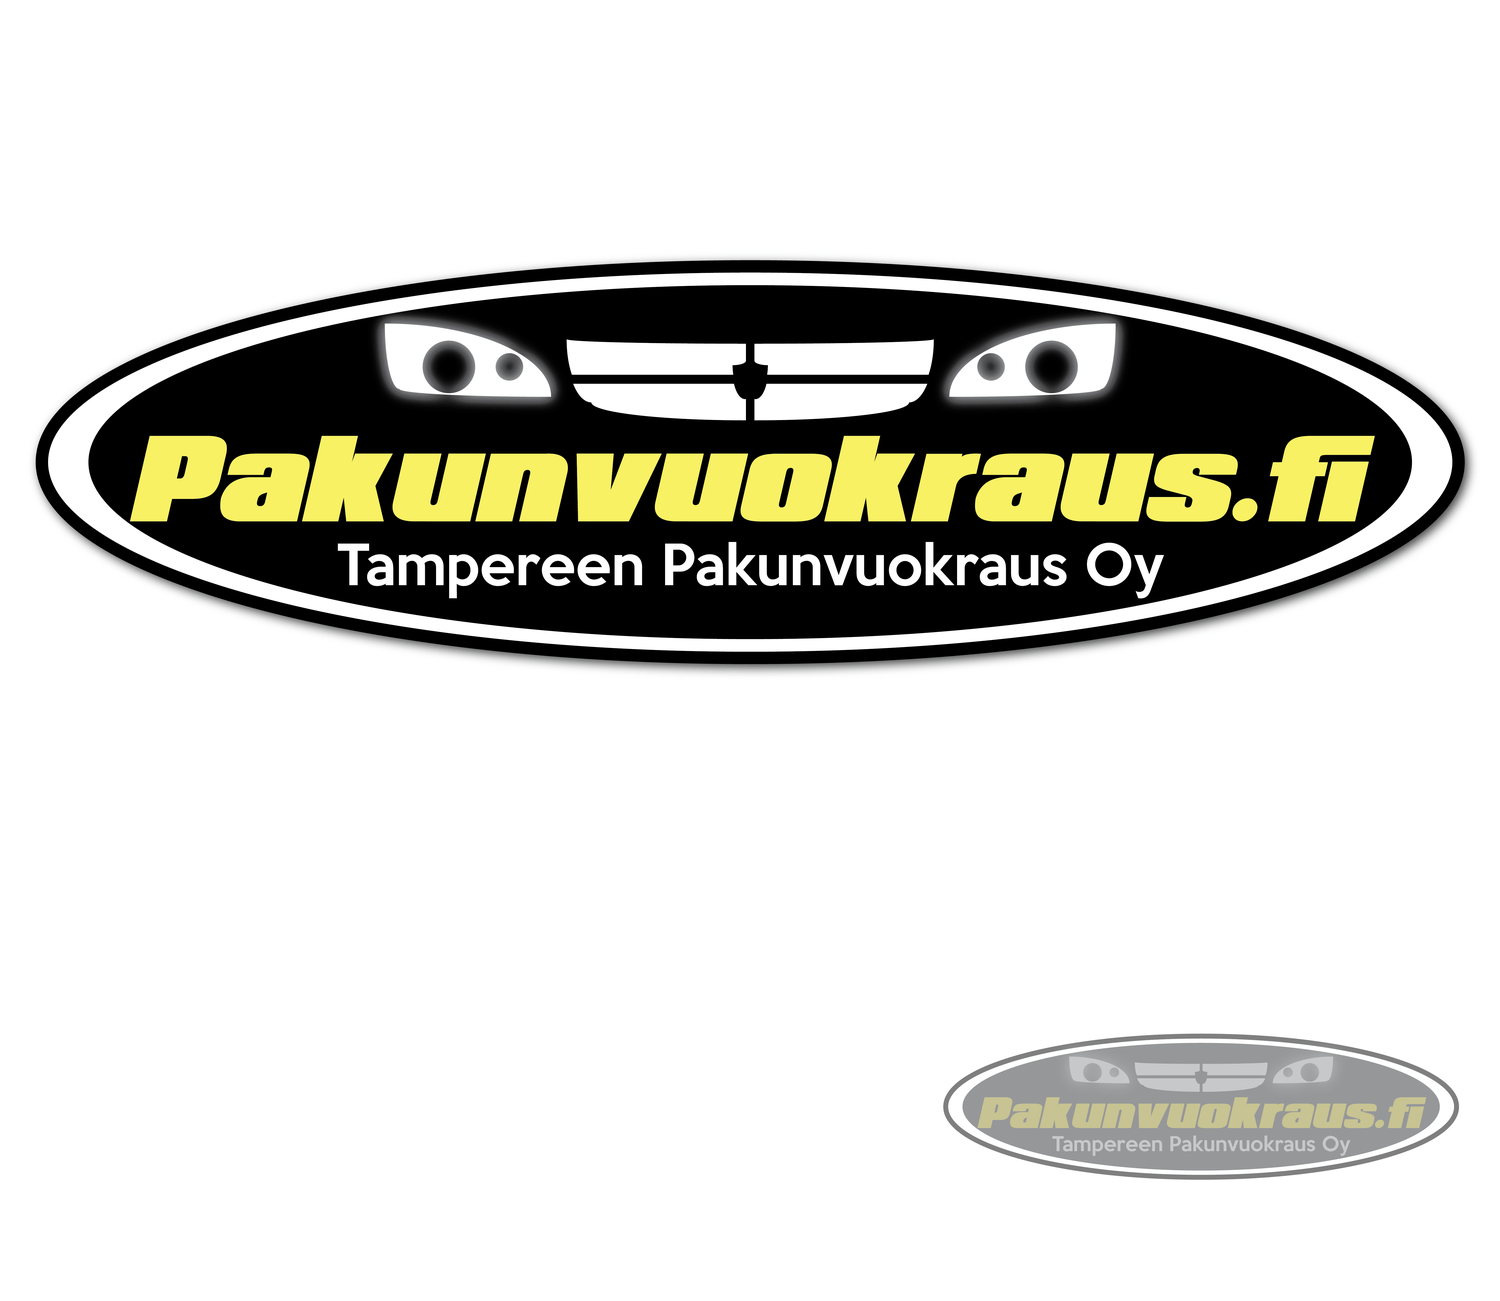 American Rental Car Company Logo - Colorful, Modern, Rental Car Logo Design for pakunvuokraus.fi by ...